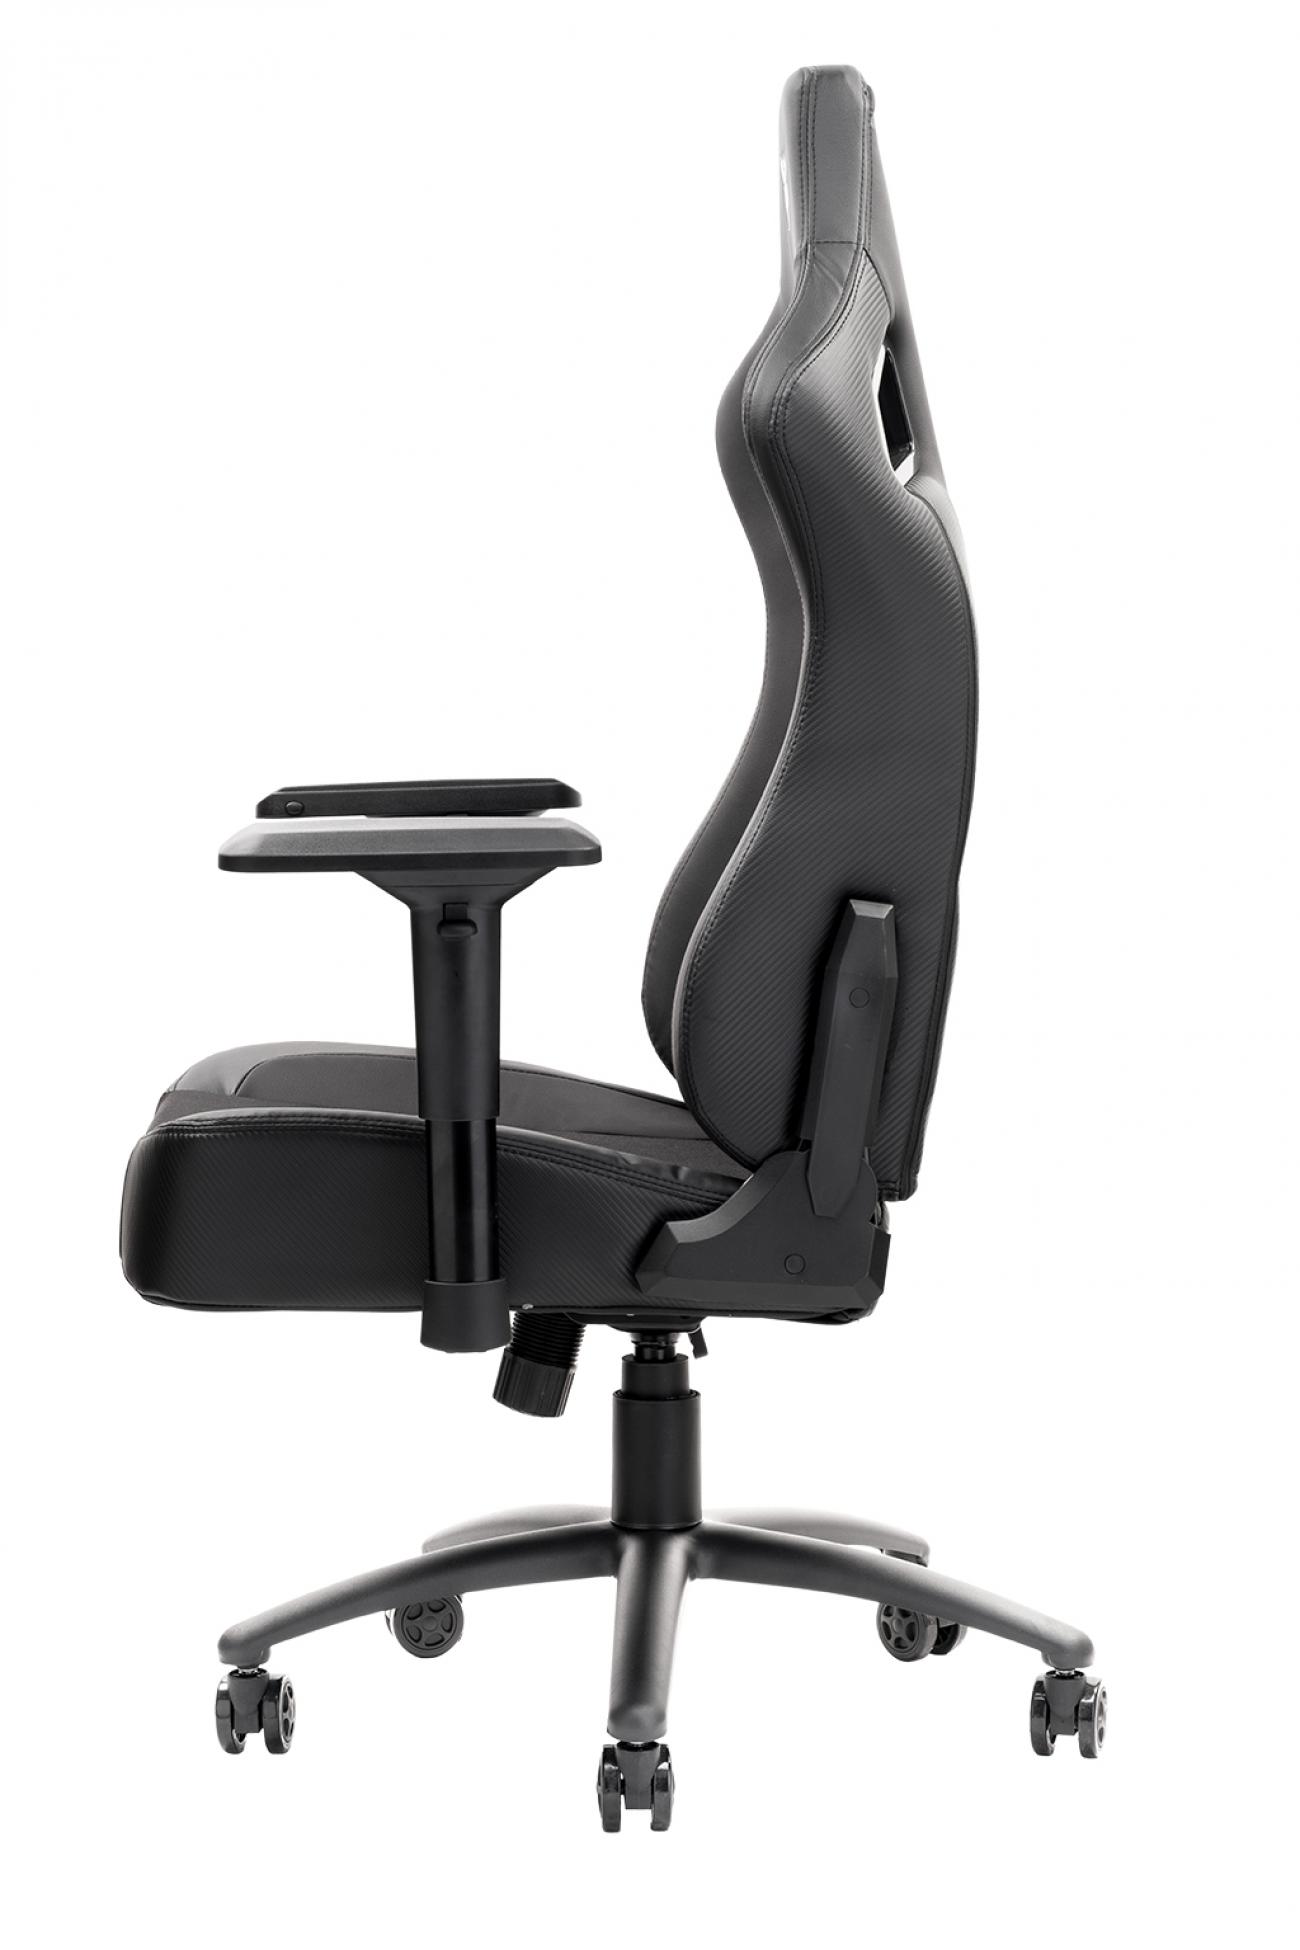 itek Gaming Chair SCOUT PM30 - PVCe Tessuto, Braccioli 4D, Nero Bianco